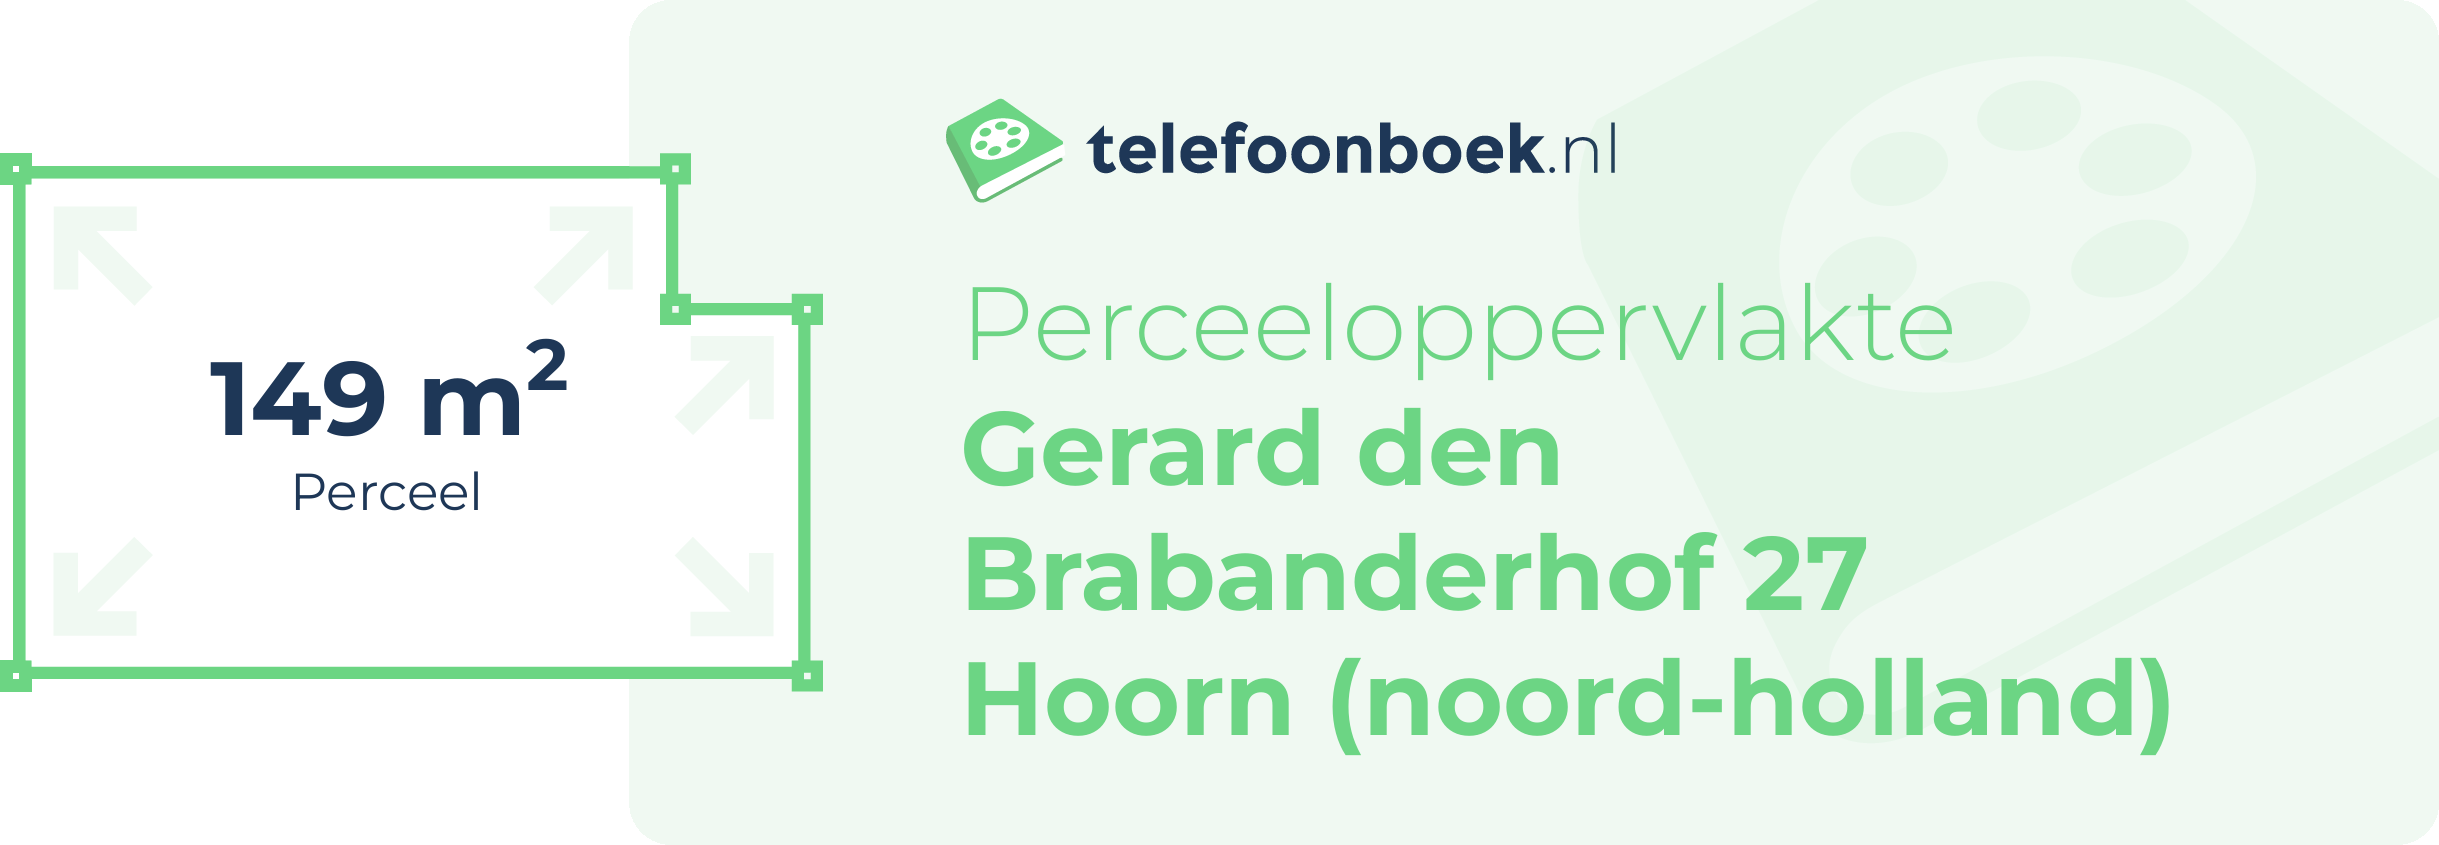 Perceeloppervlakte Gerard Den Brabanderhof 27 Hoorn (Noord-Holland)